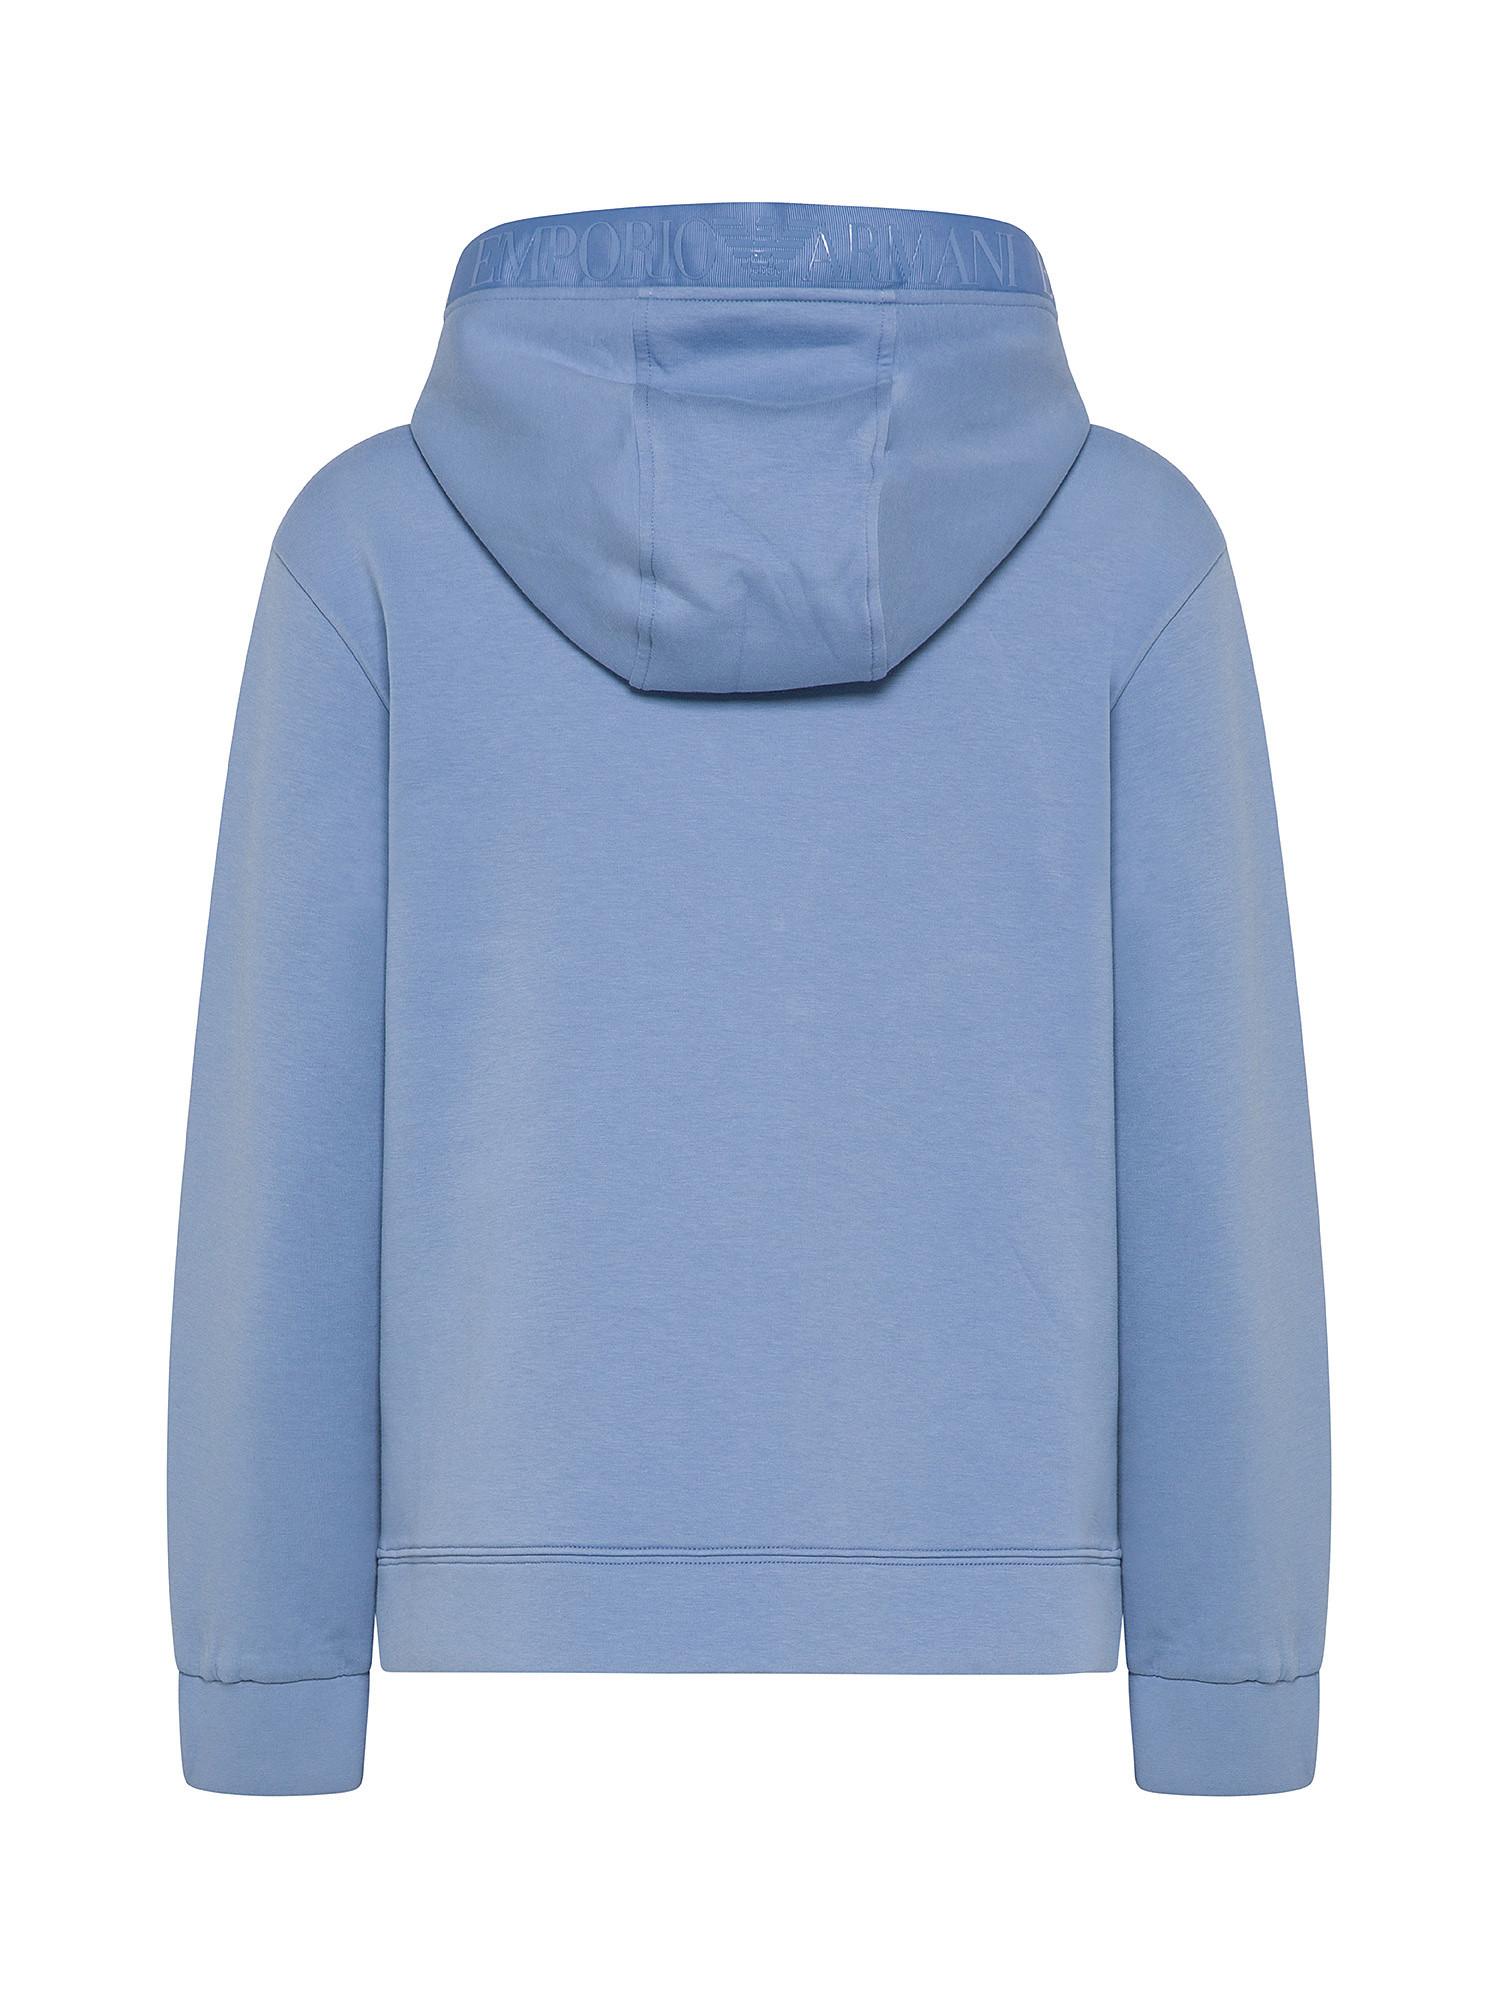 Emporio Armani - Full zip sweatshirt with hood and logo tape, Light Blue, large image number 1